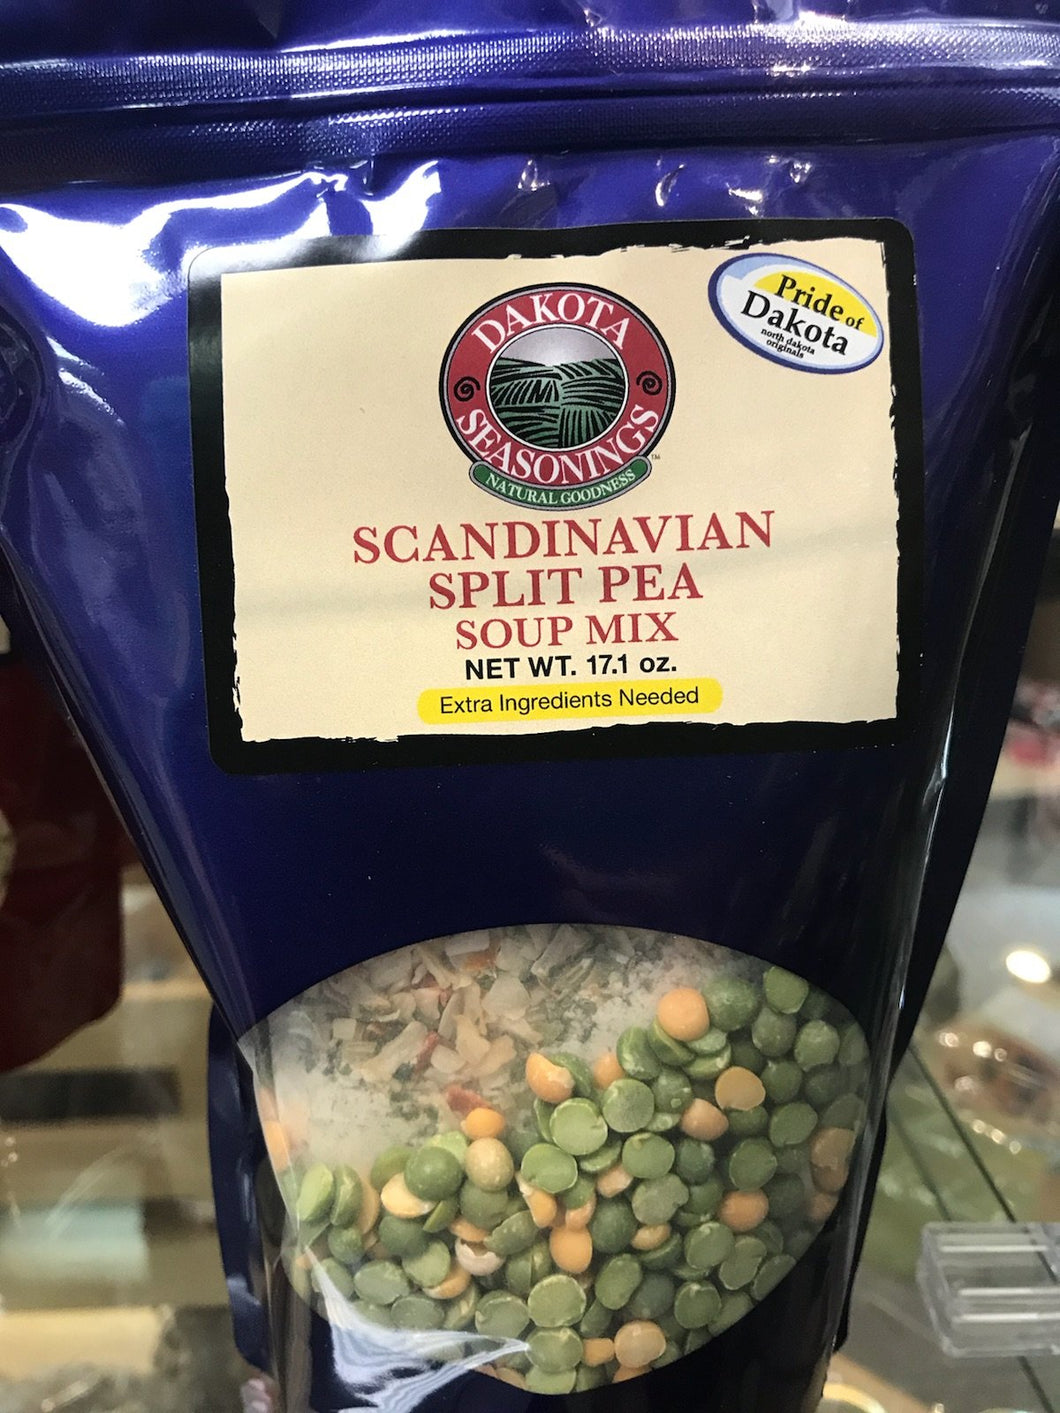 Dakota Seasonings Scandinavian Split Pea soup mix